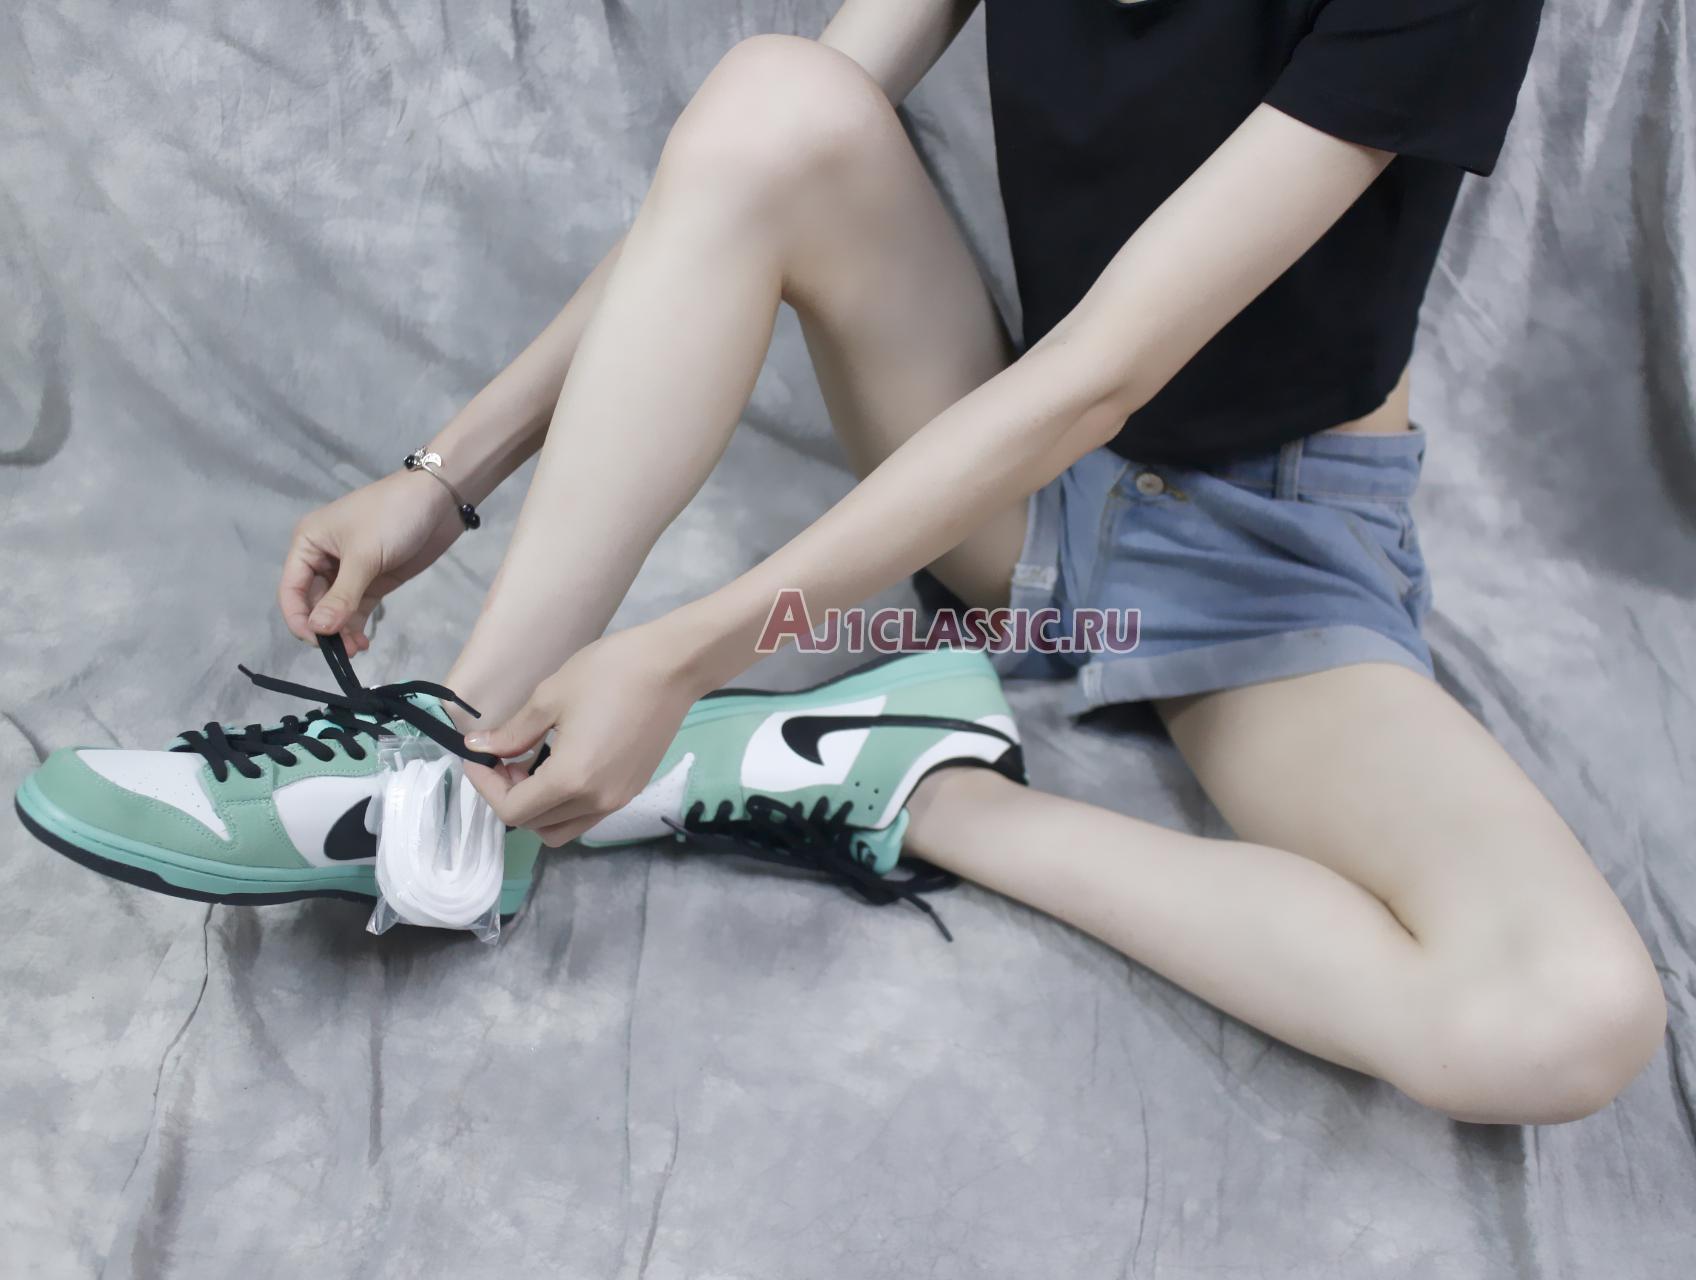 Nike SB Dunk Low Sea Crystal 819674-301 Green Glow/Black-Summit White Sneakers